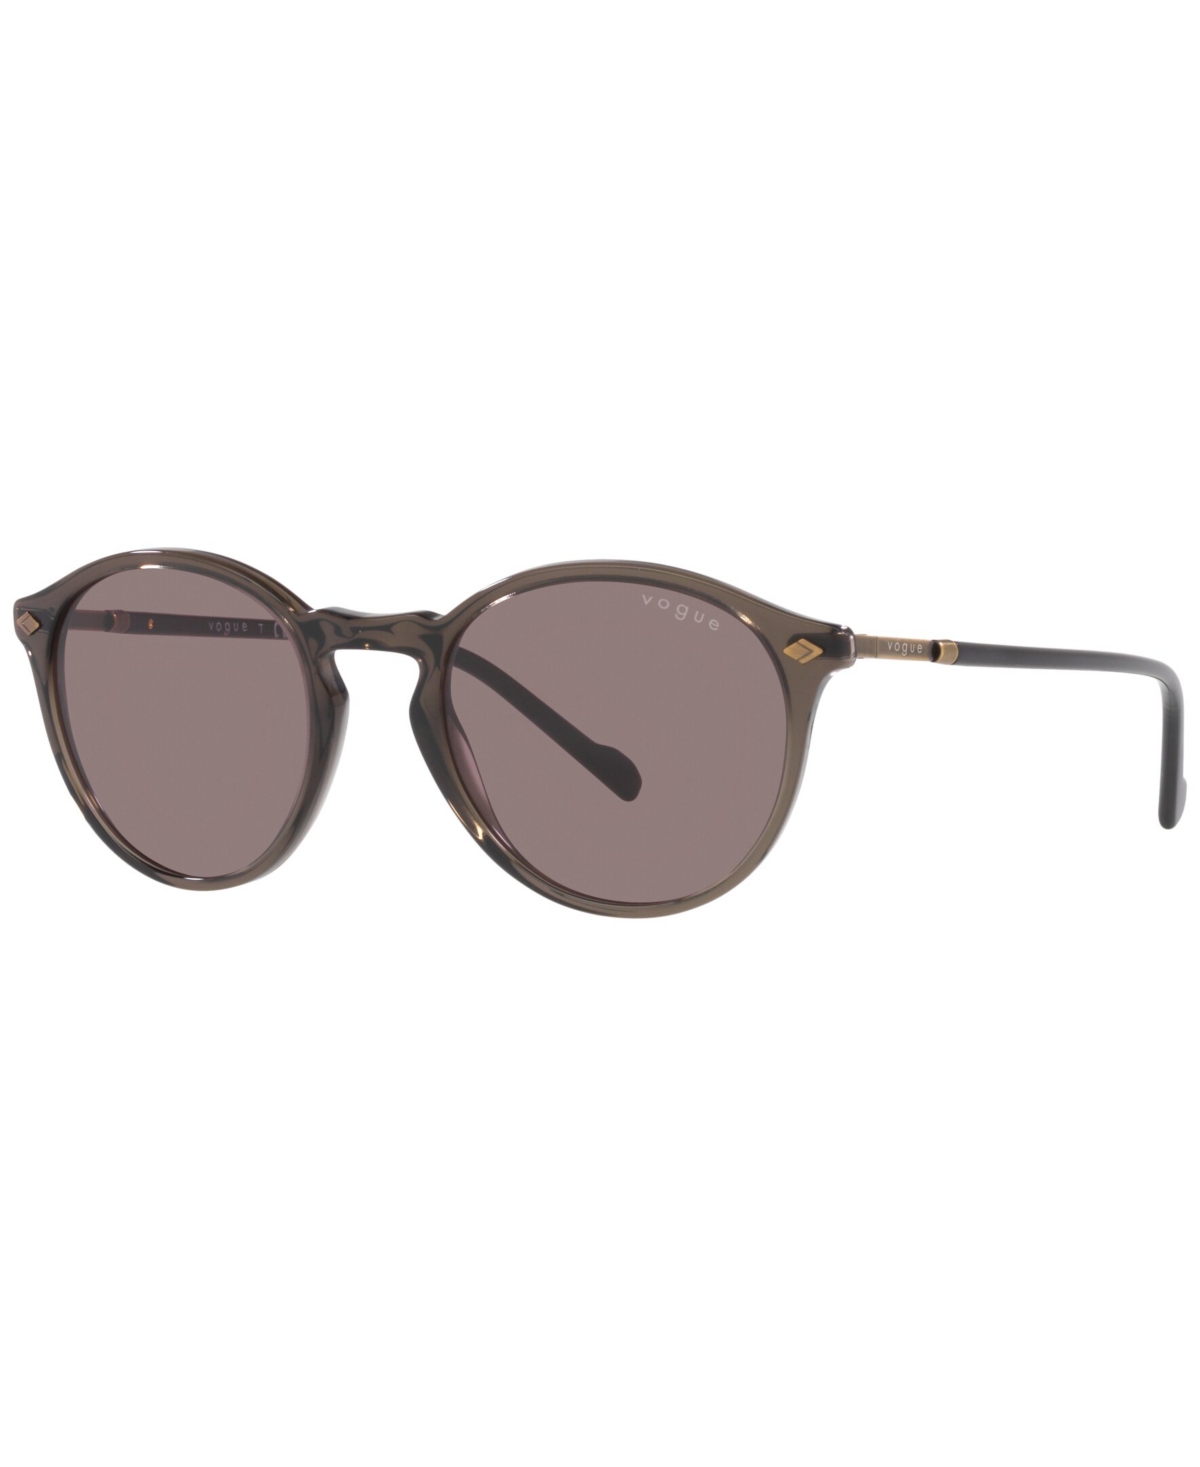 Men's Sunglasses, VO5432S 51 - Gray Transparent